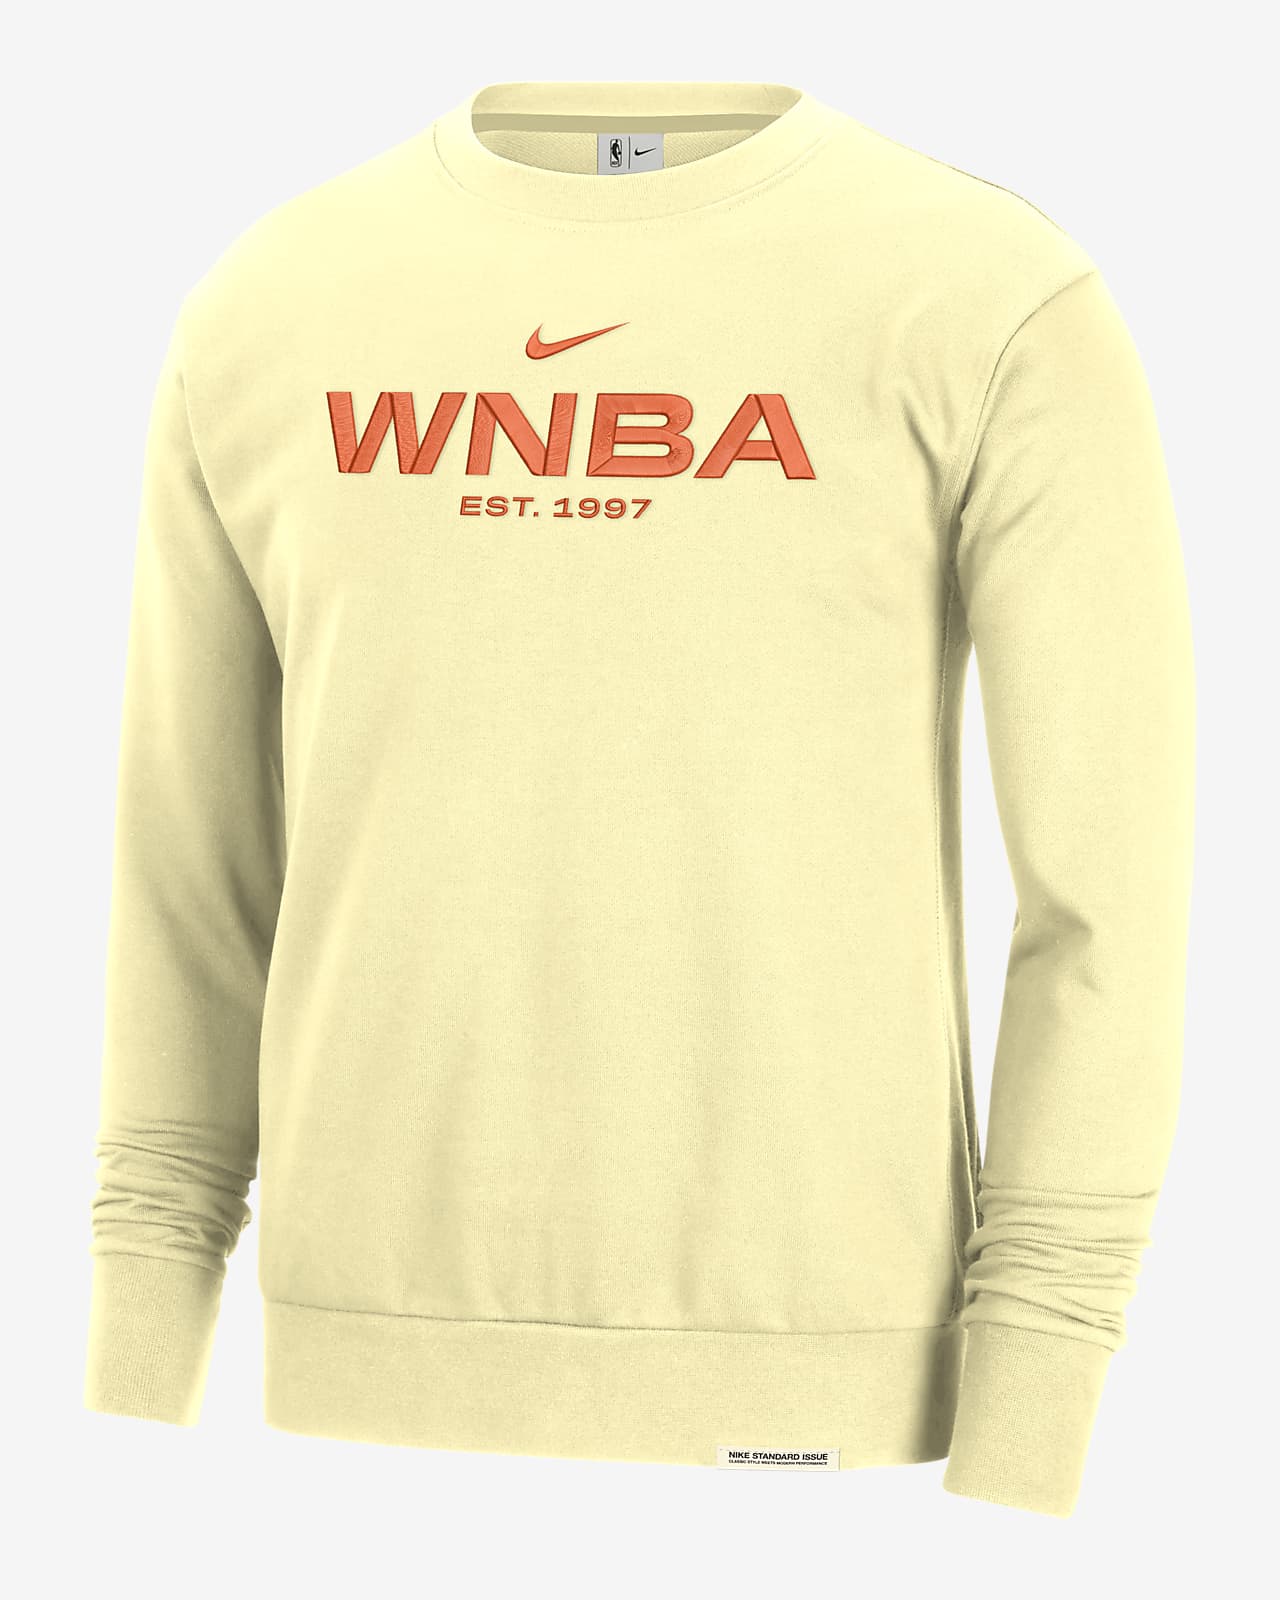 WNBA Standard Issue Nike Dri-FIT Basketball Crew-Neck Sweatshirt